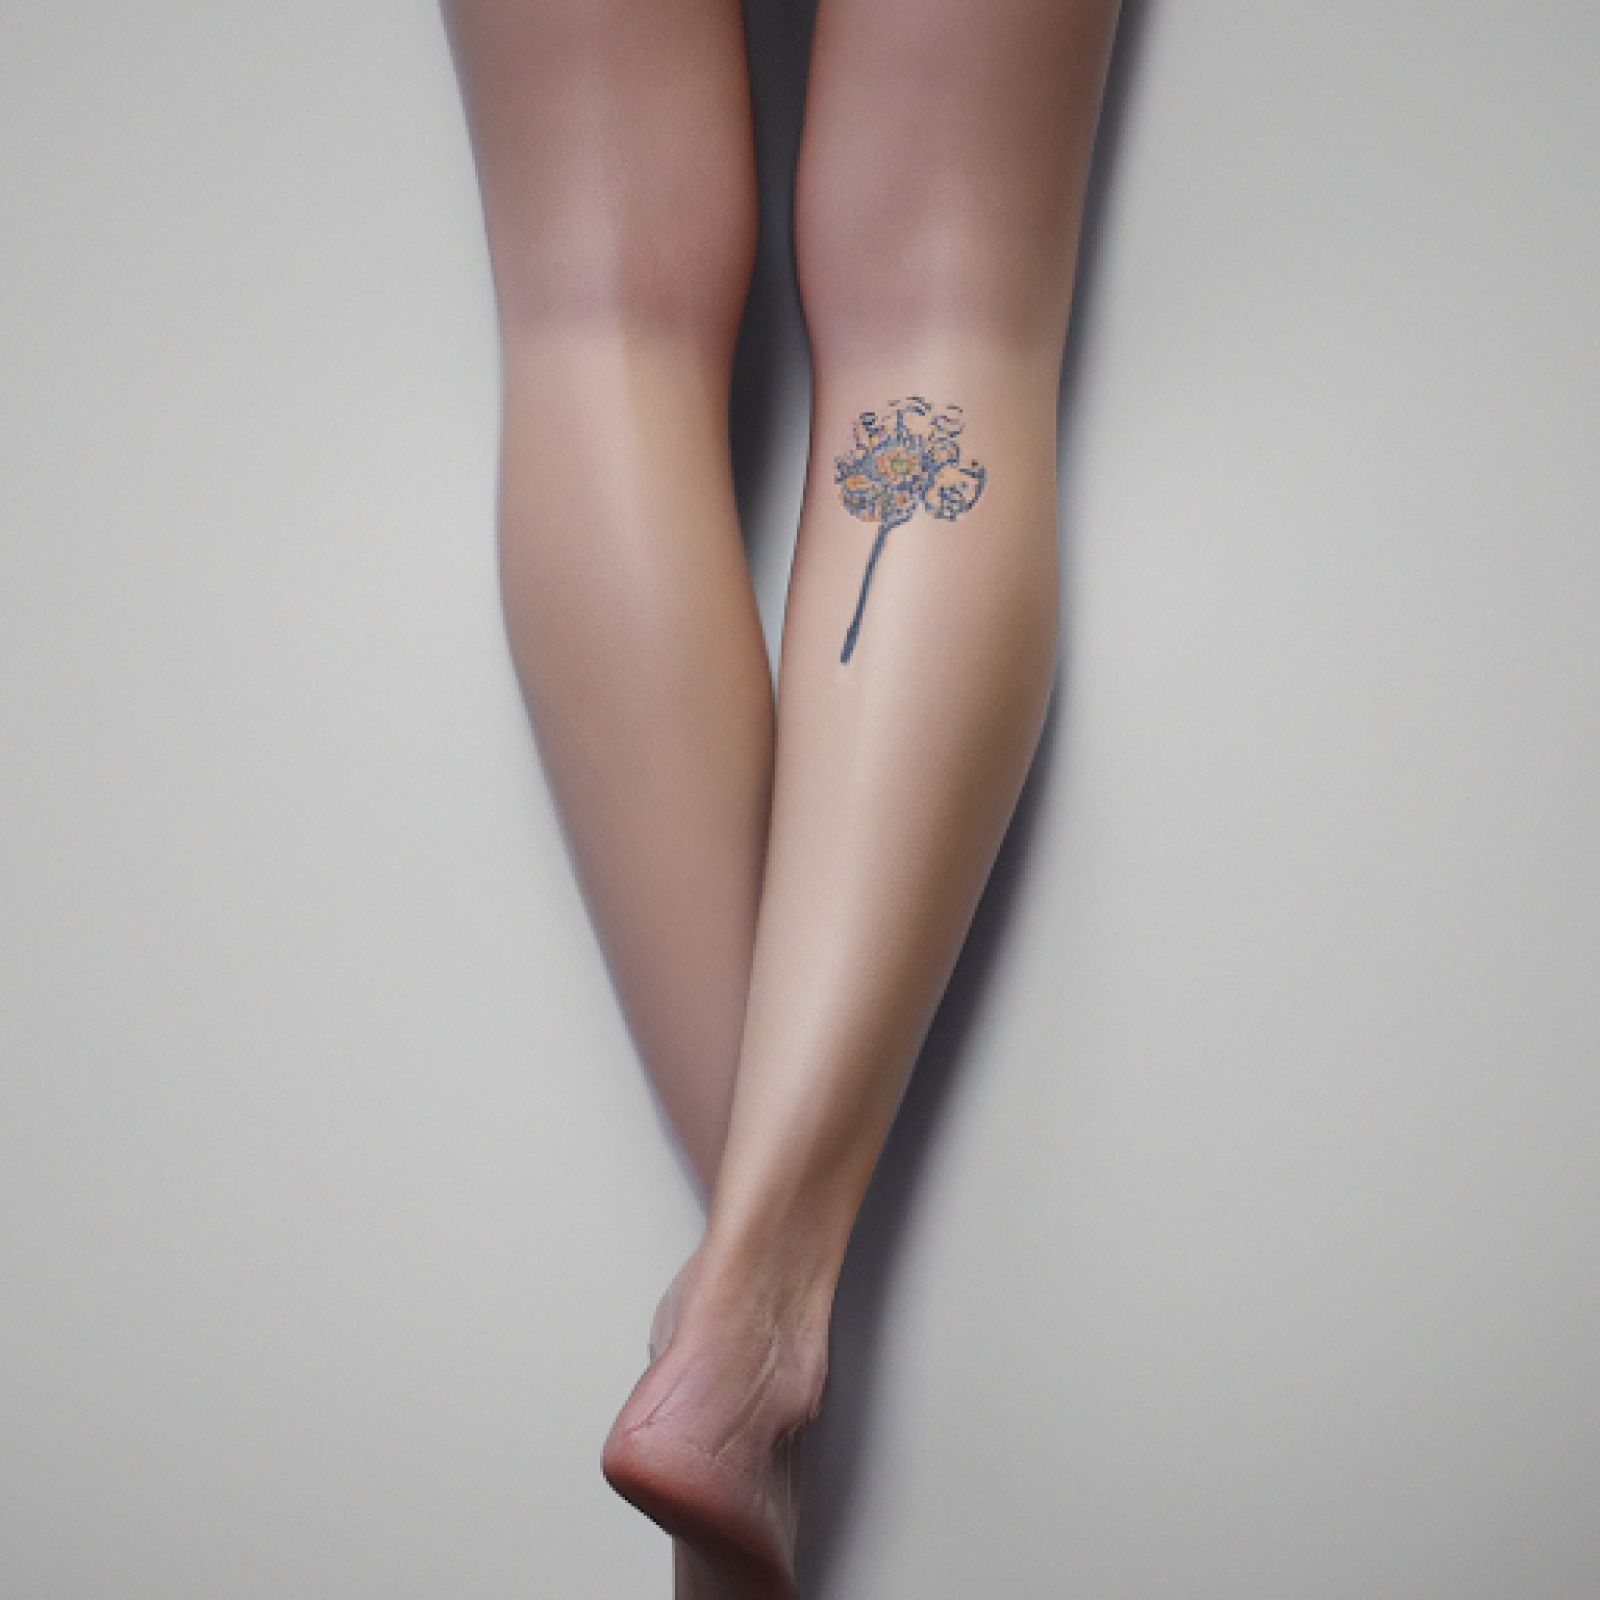 Watercolor tattoo on leg for women